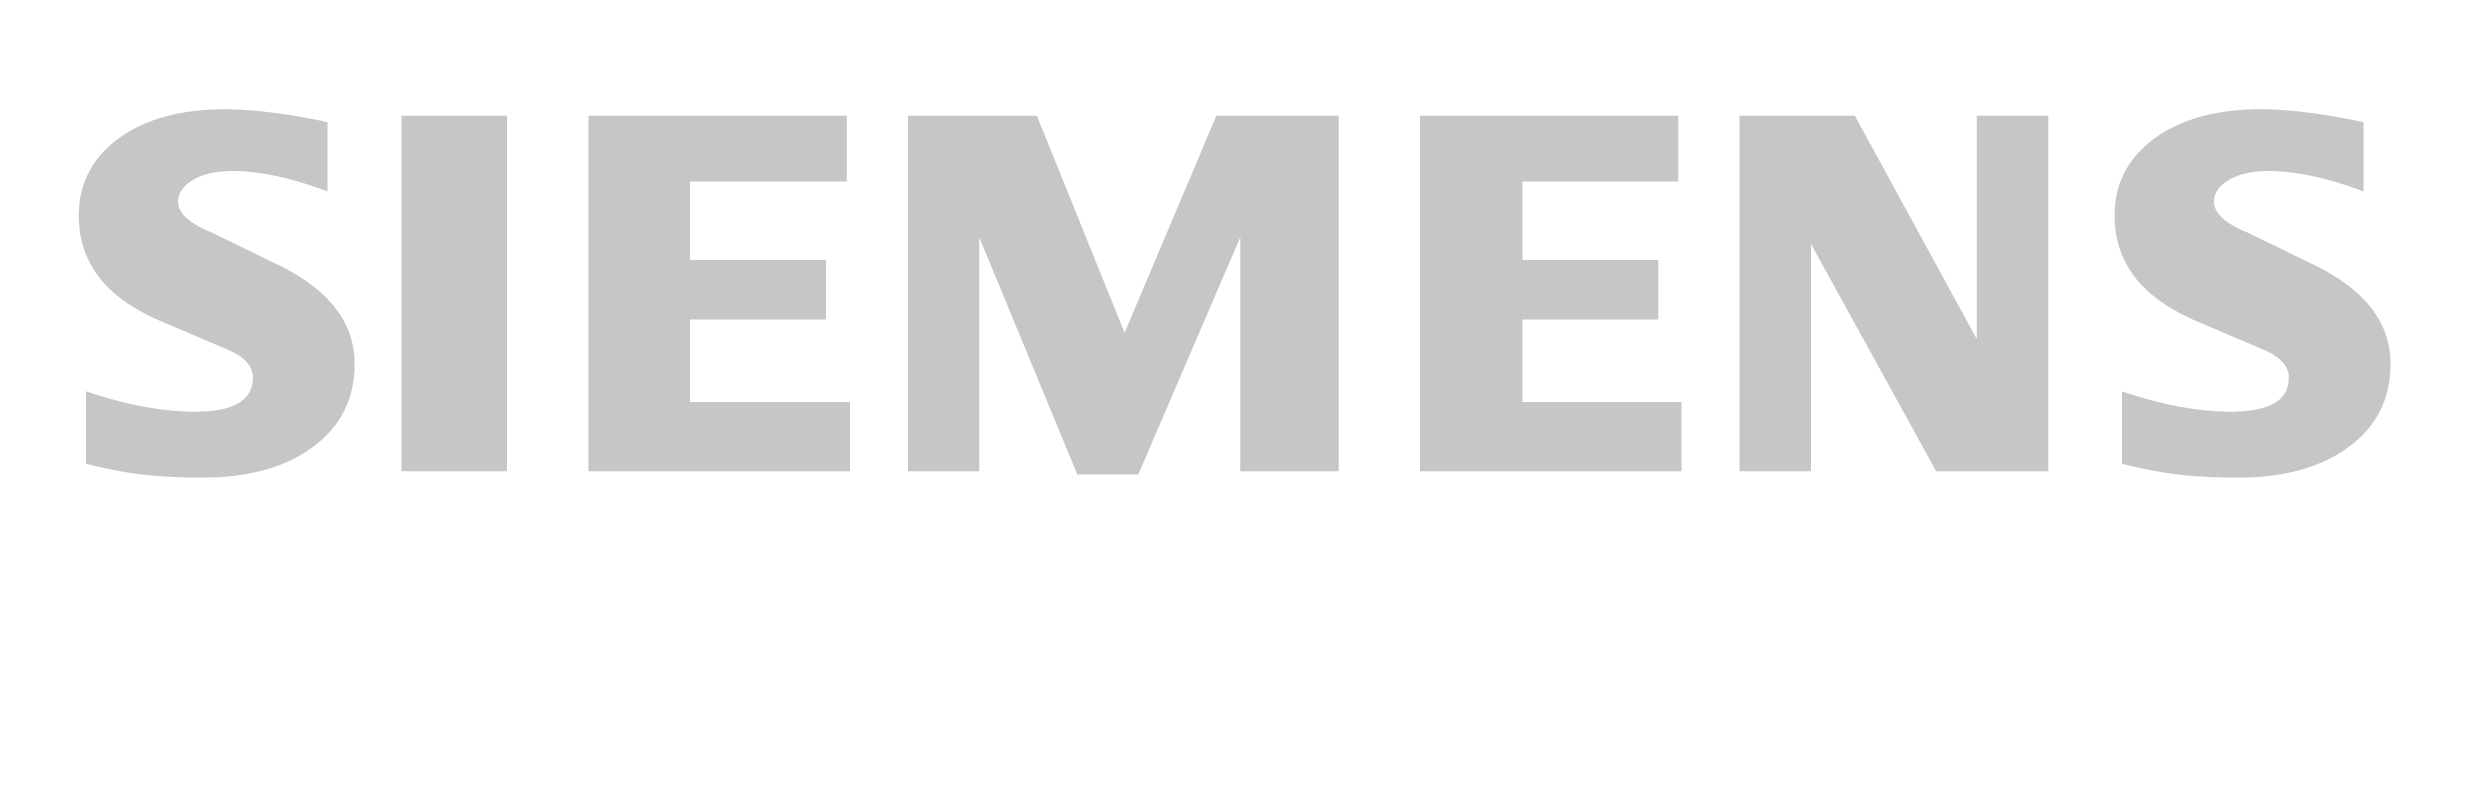 Siemens Logo black white